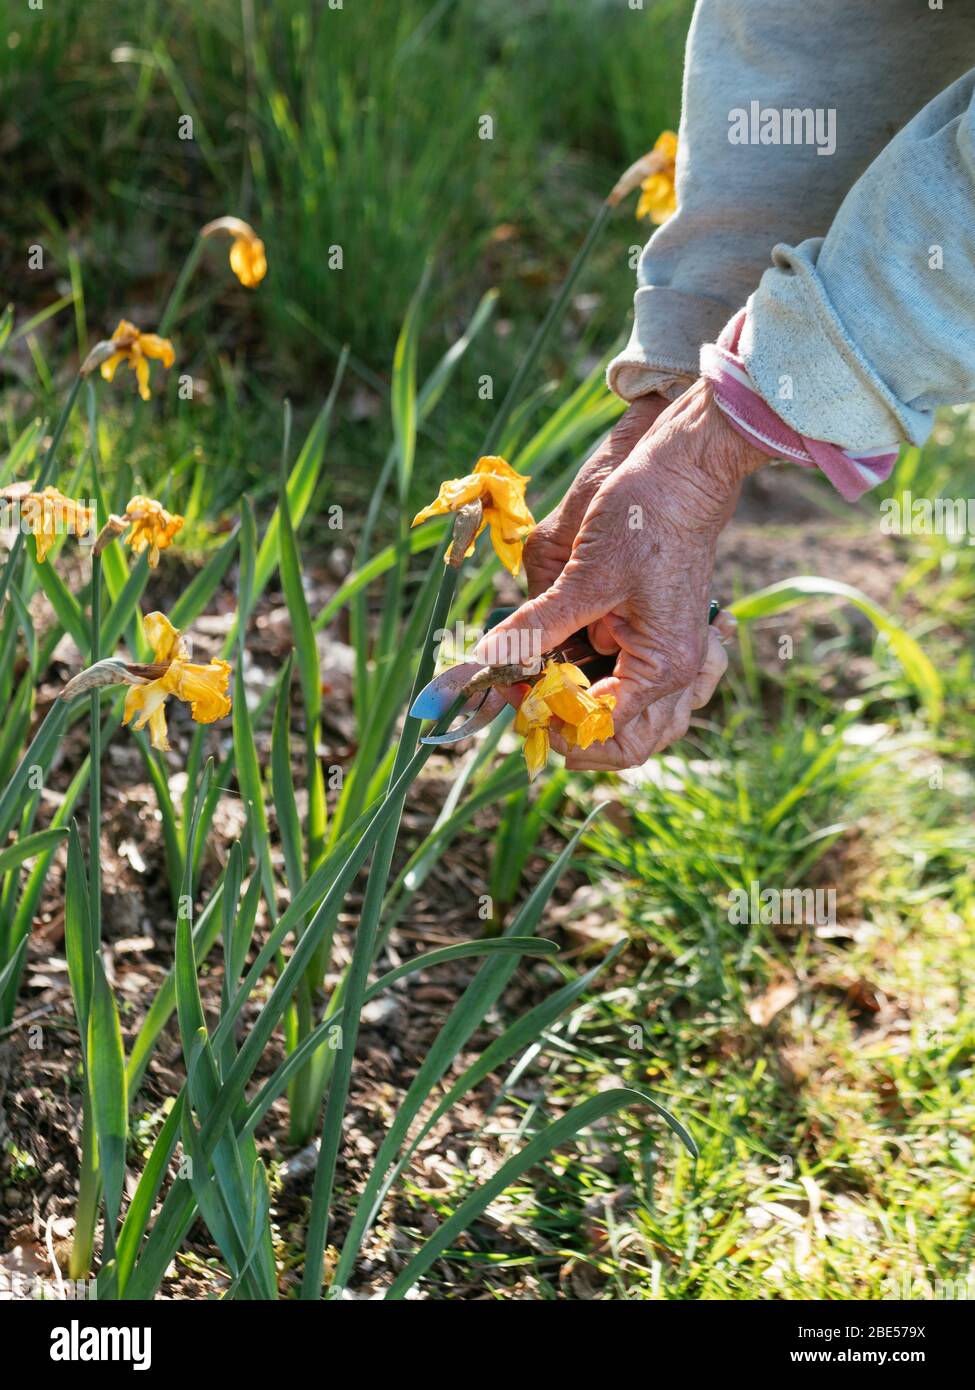 Gardener deadheading daffodils with secateurs. Stock Photo